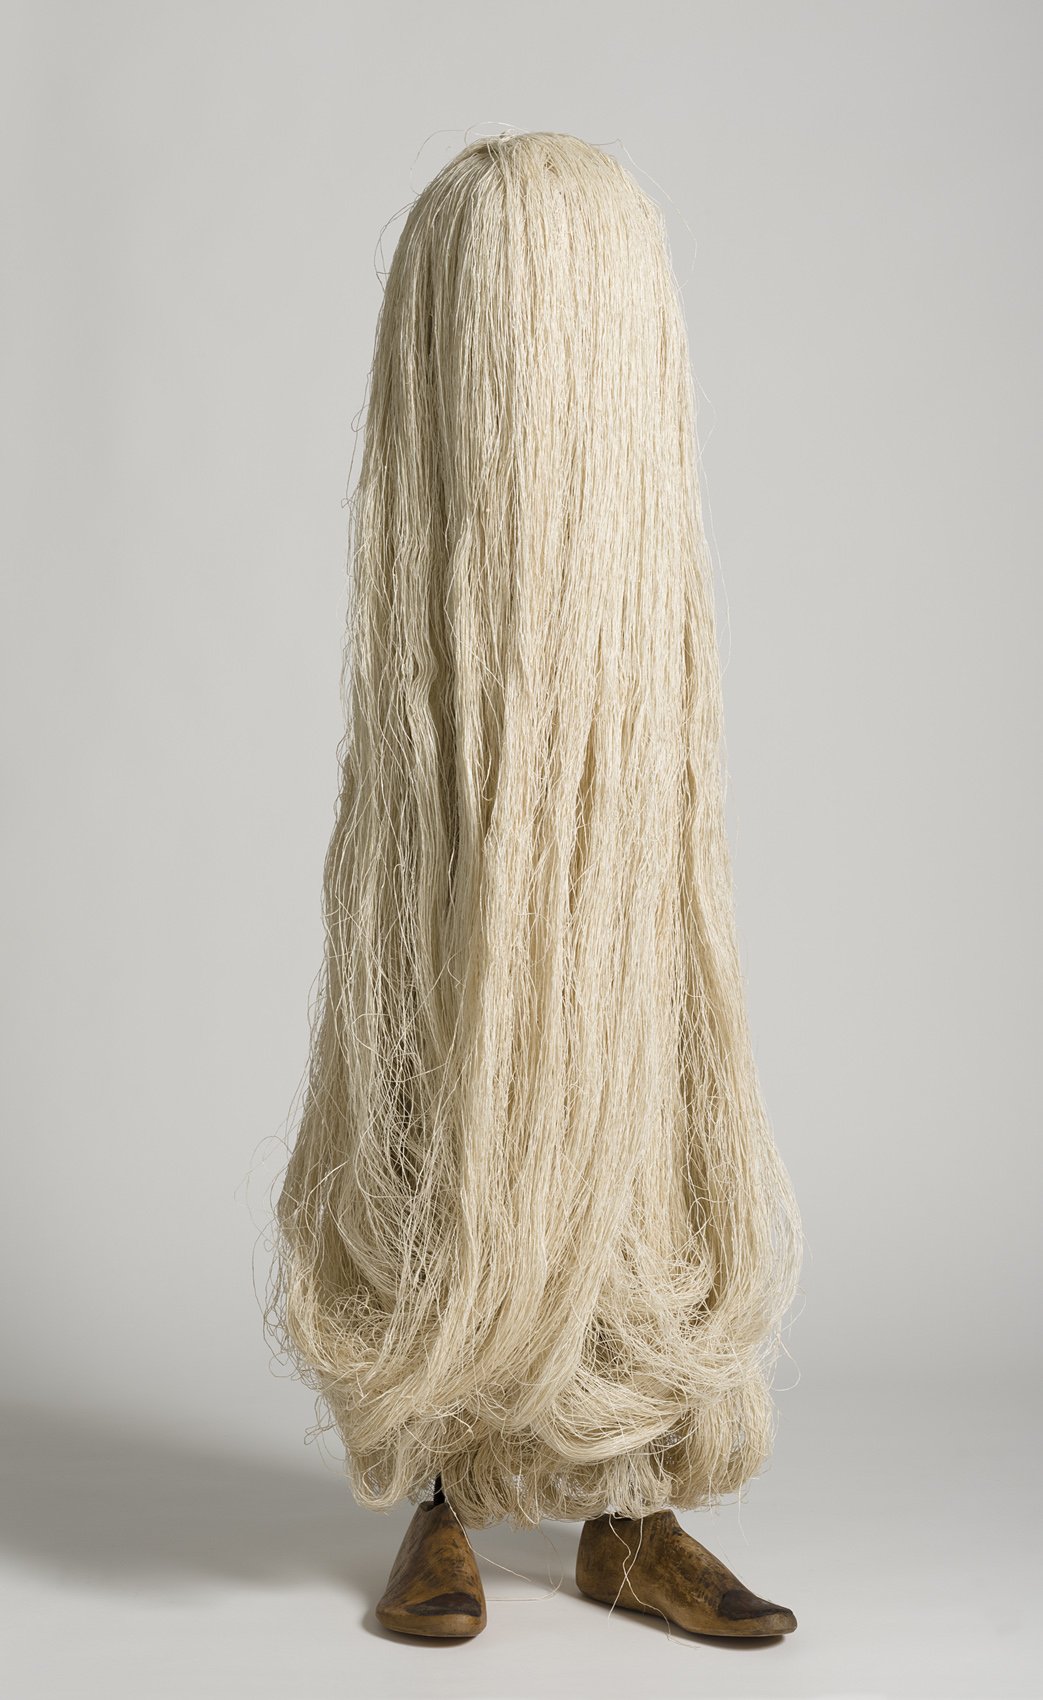 Kaija Poijula, “Coma Berenice”, 2018, linen yarn, old wooden cobbler shoe forms, 115 x 30 x 30 cm